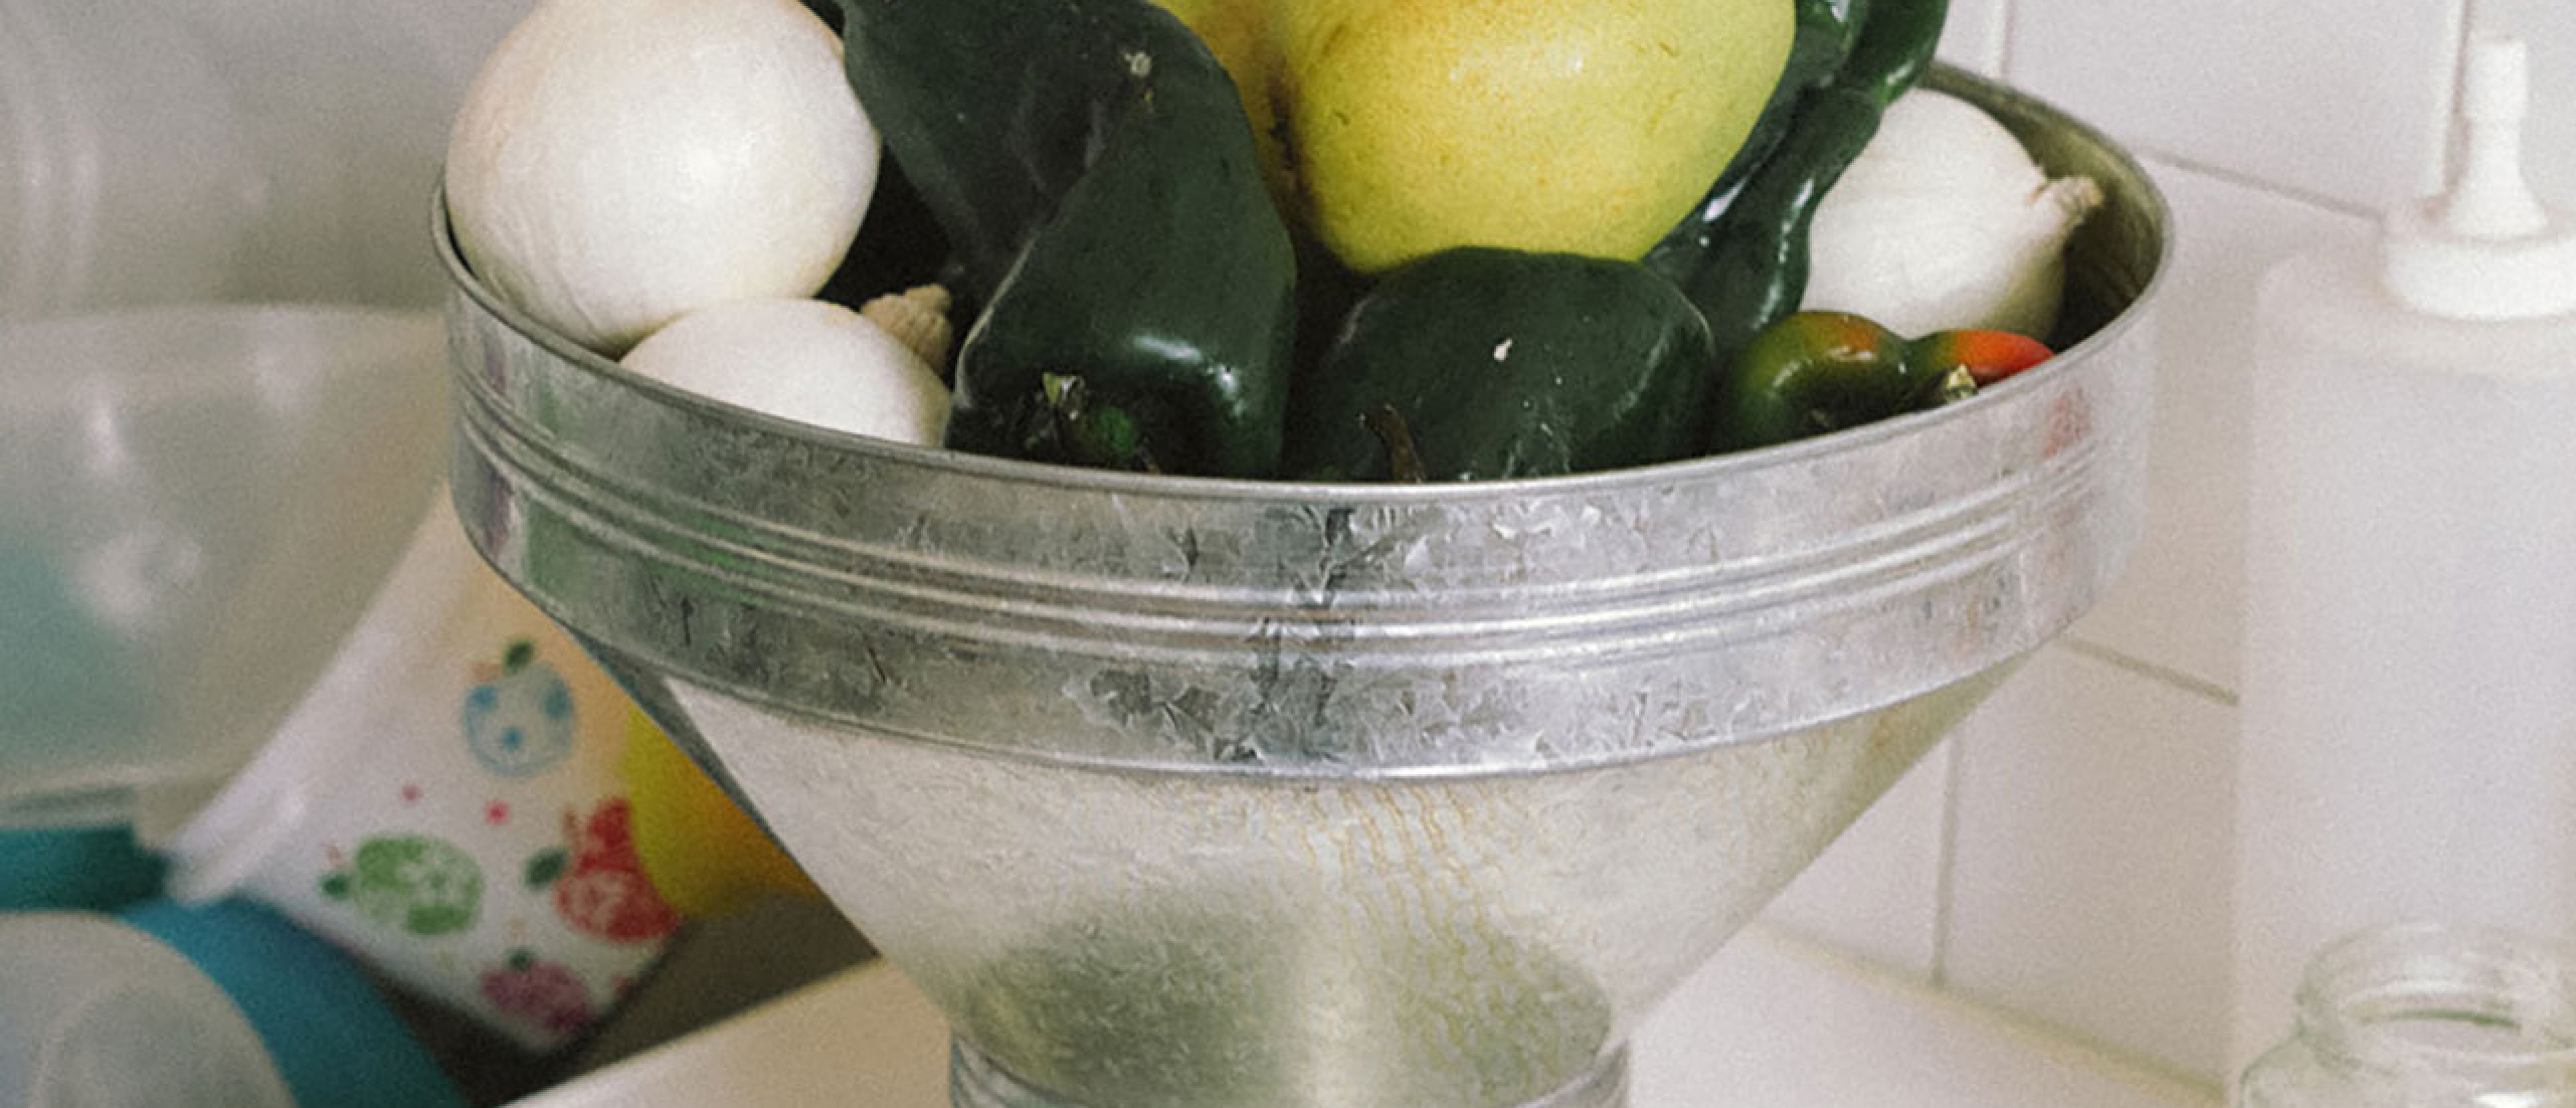 A vase or bowl with vegetables or fruit